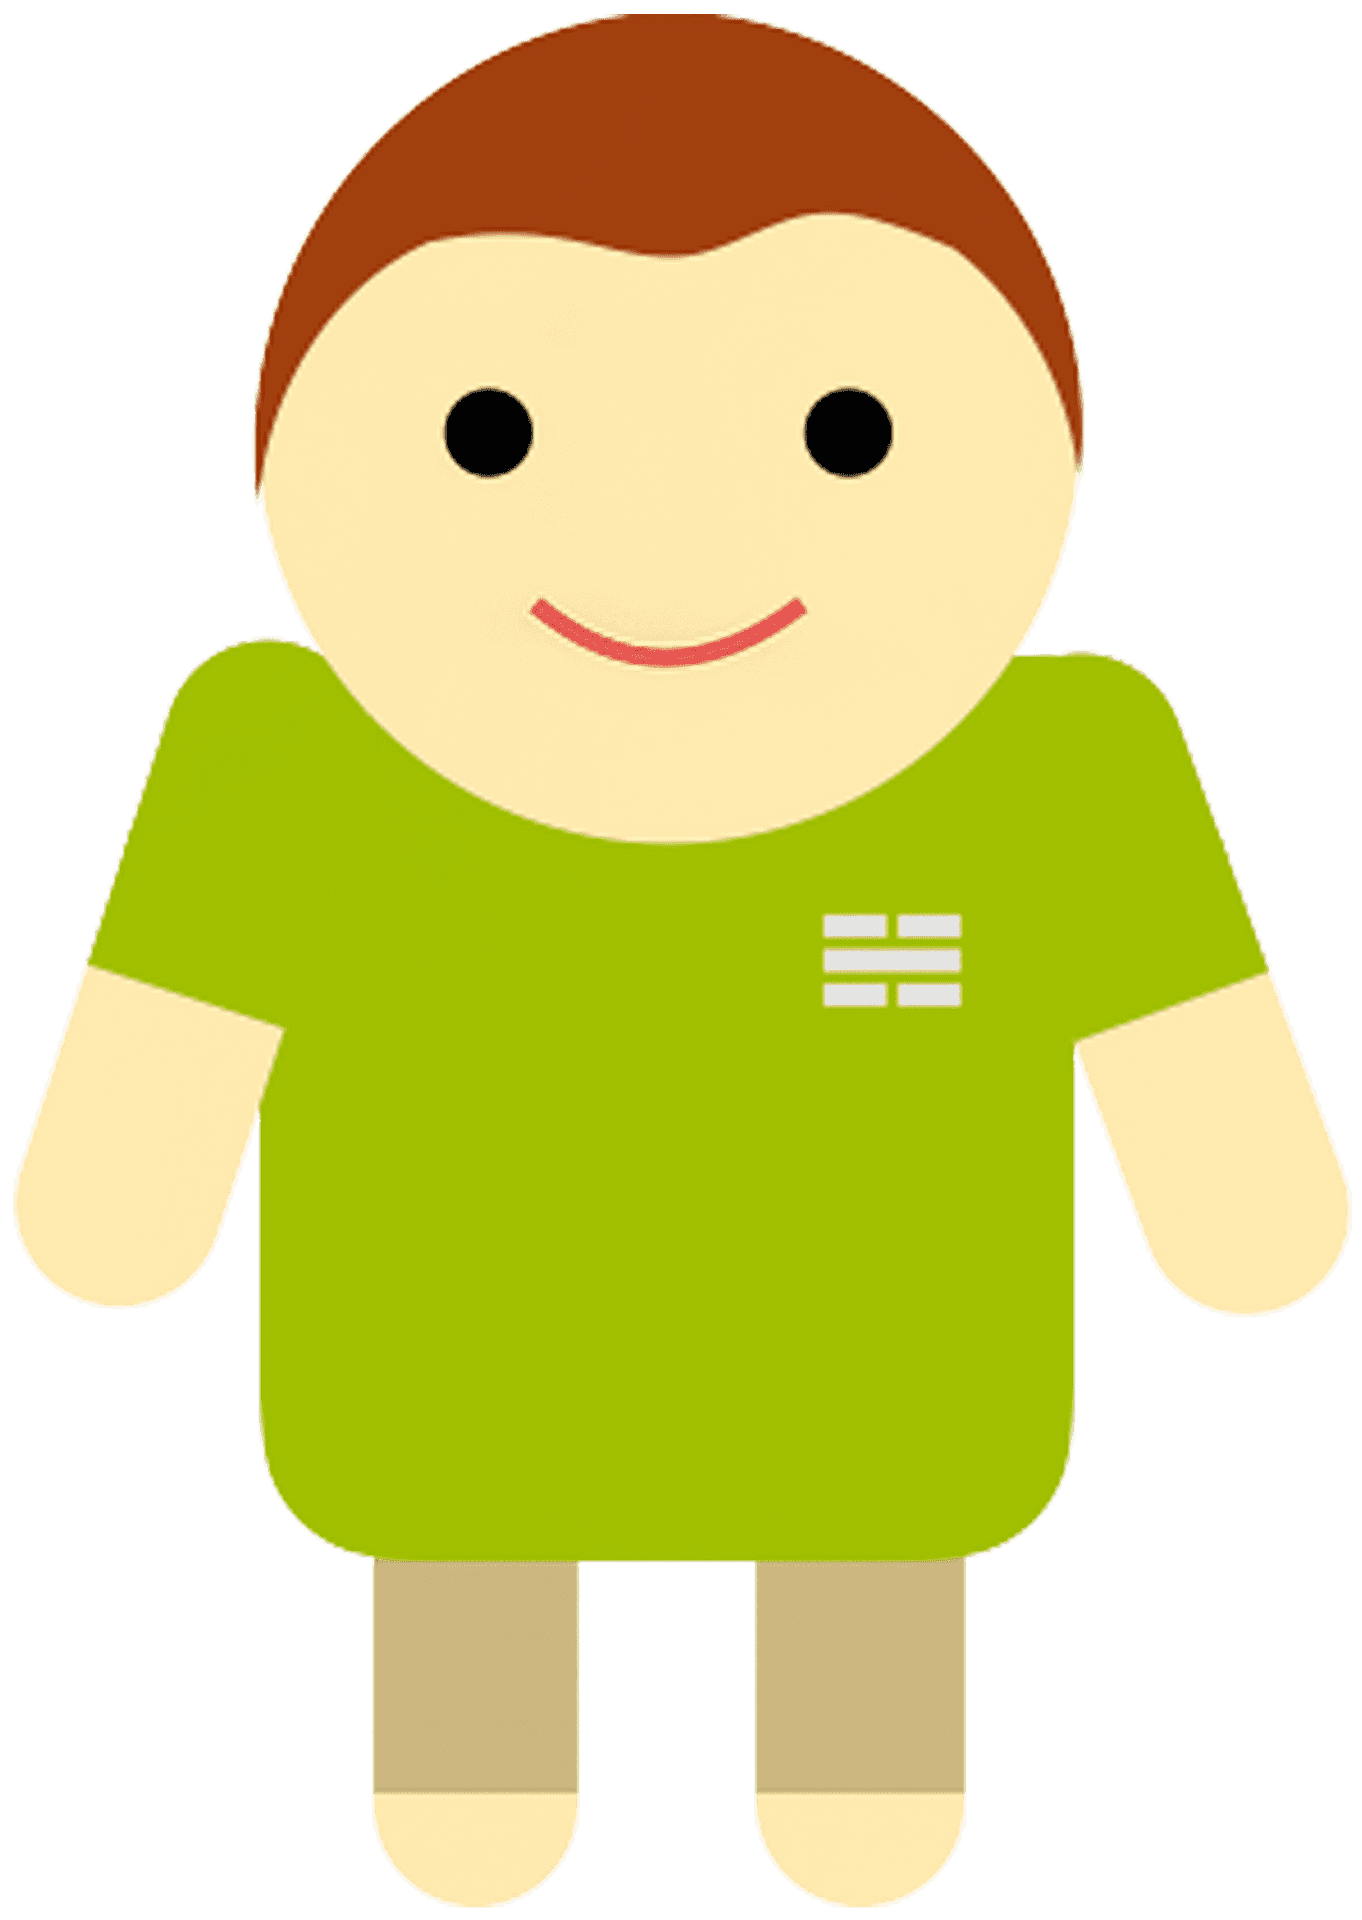 Smiling Cartoon Avatarin Green Shirt PNG image